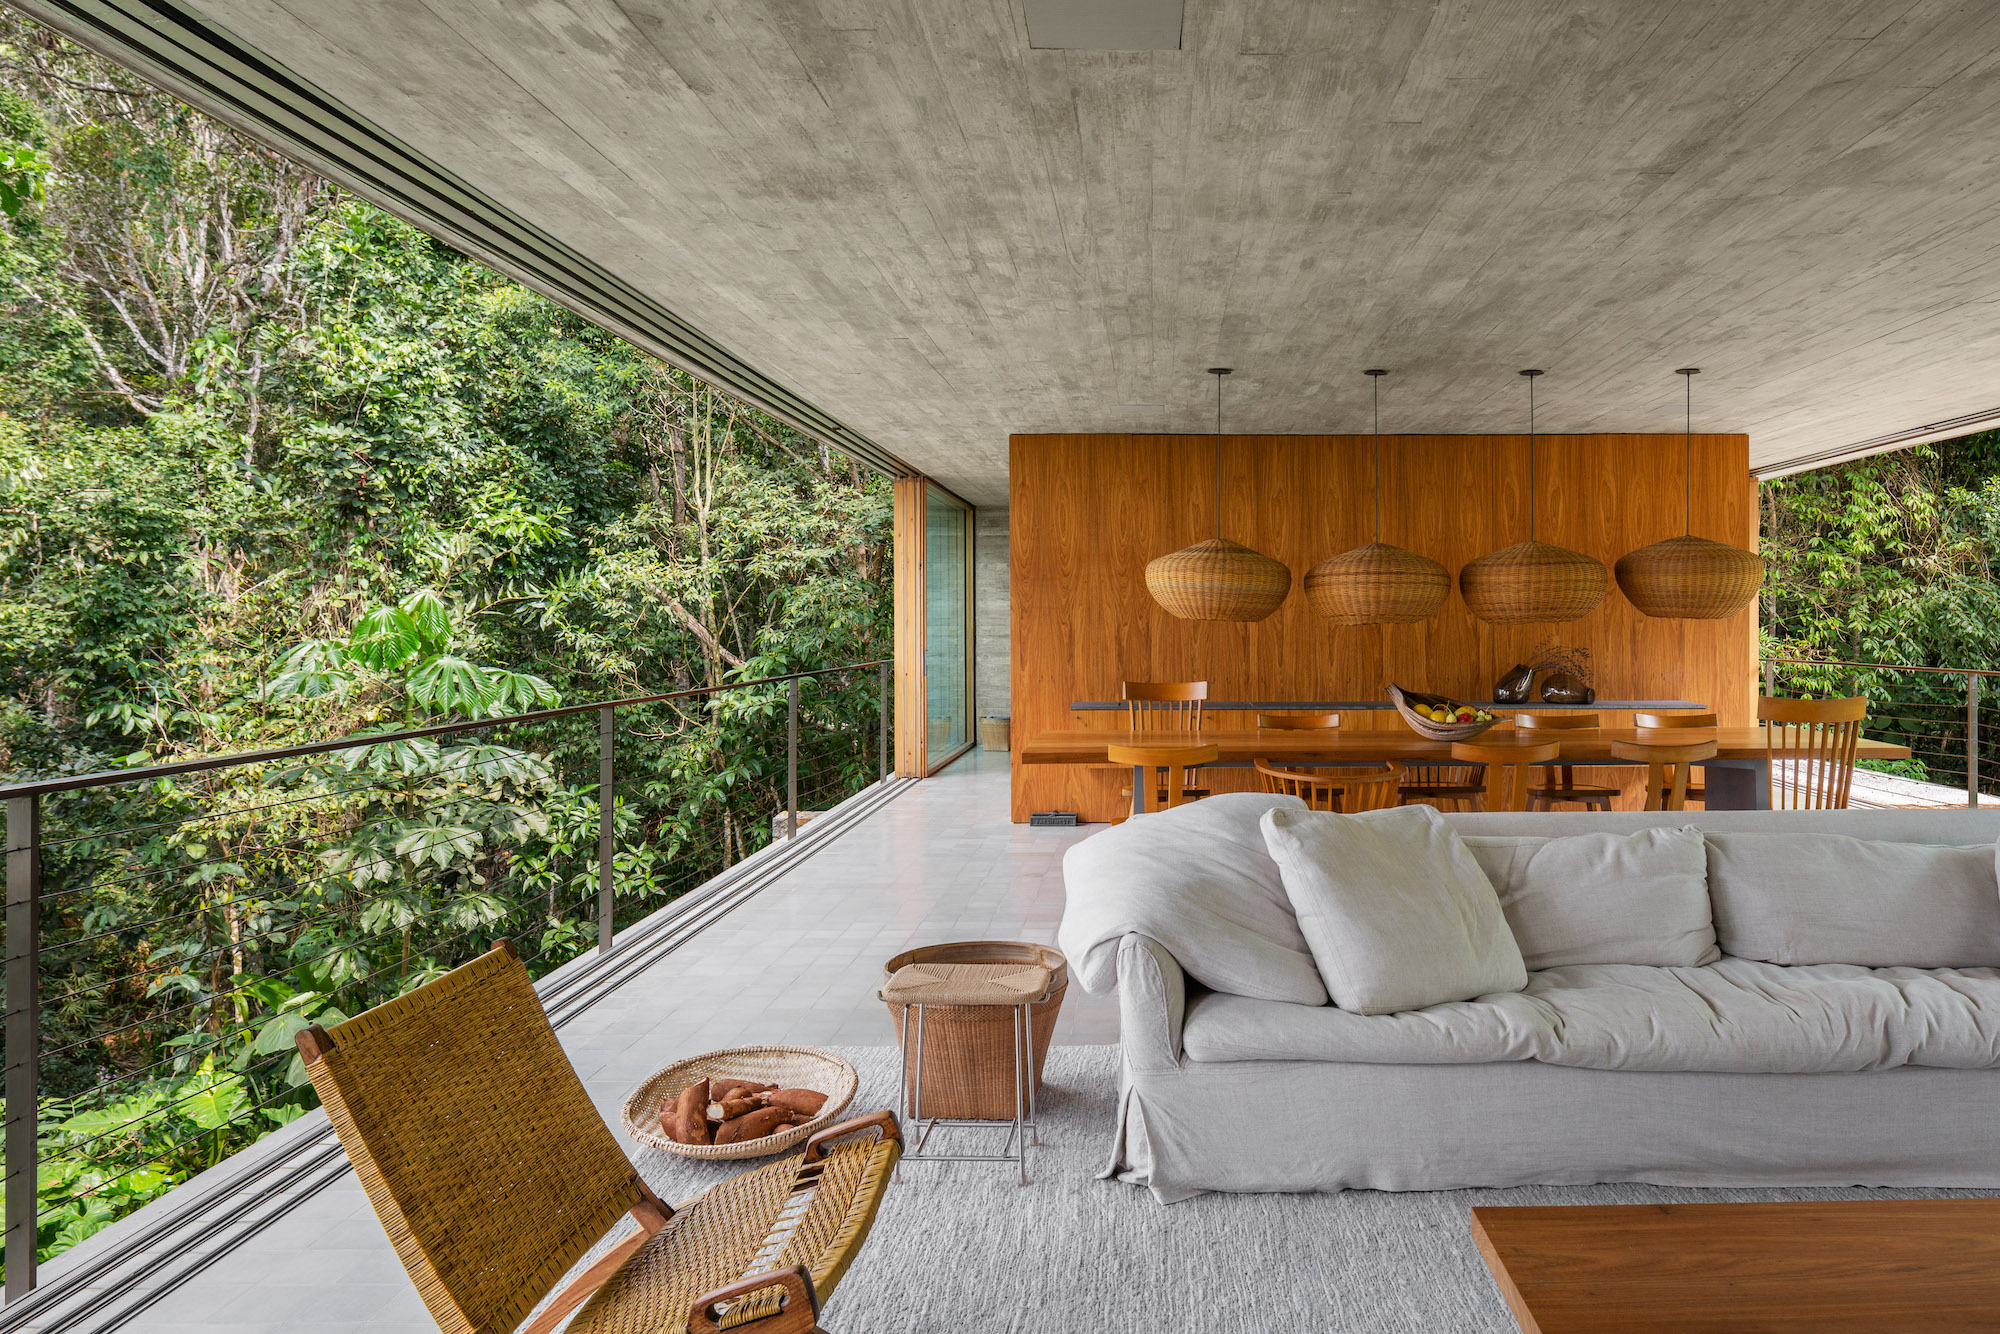 zul House in Serra do Guararu, Brazil is a masterclass in Tropical Modernism and Brutalism combined – Effect Magazine